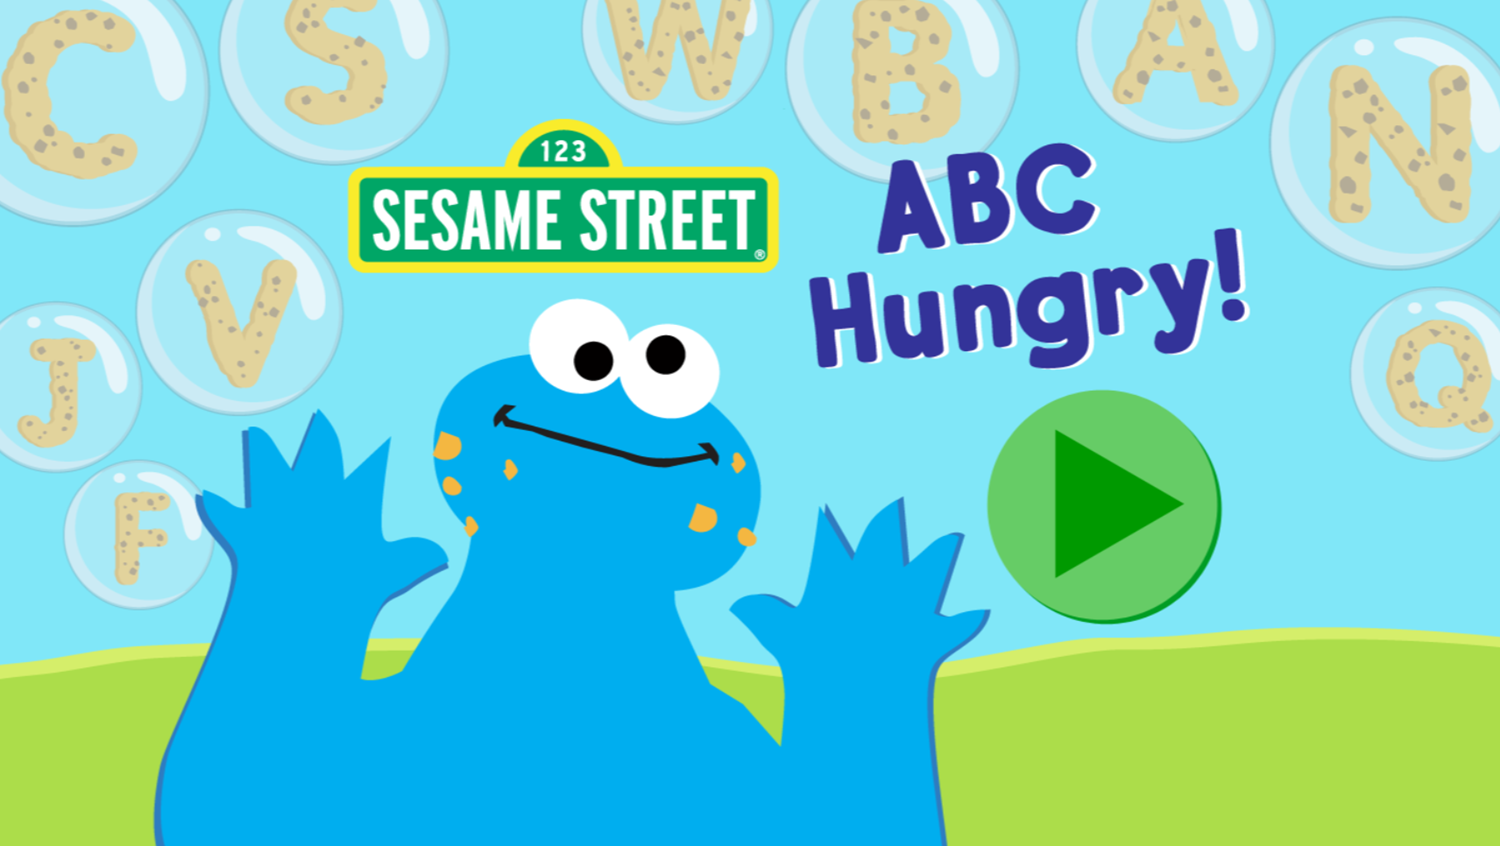 Sesame Street ABC Hungry Game Welcome Screen Screenshot.